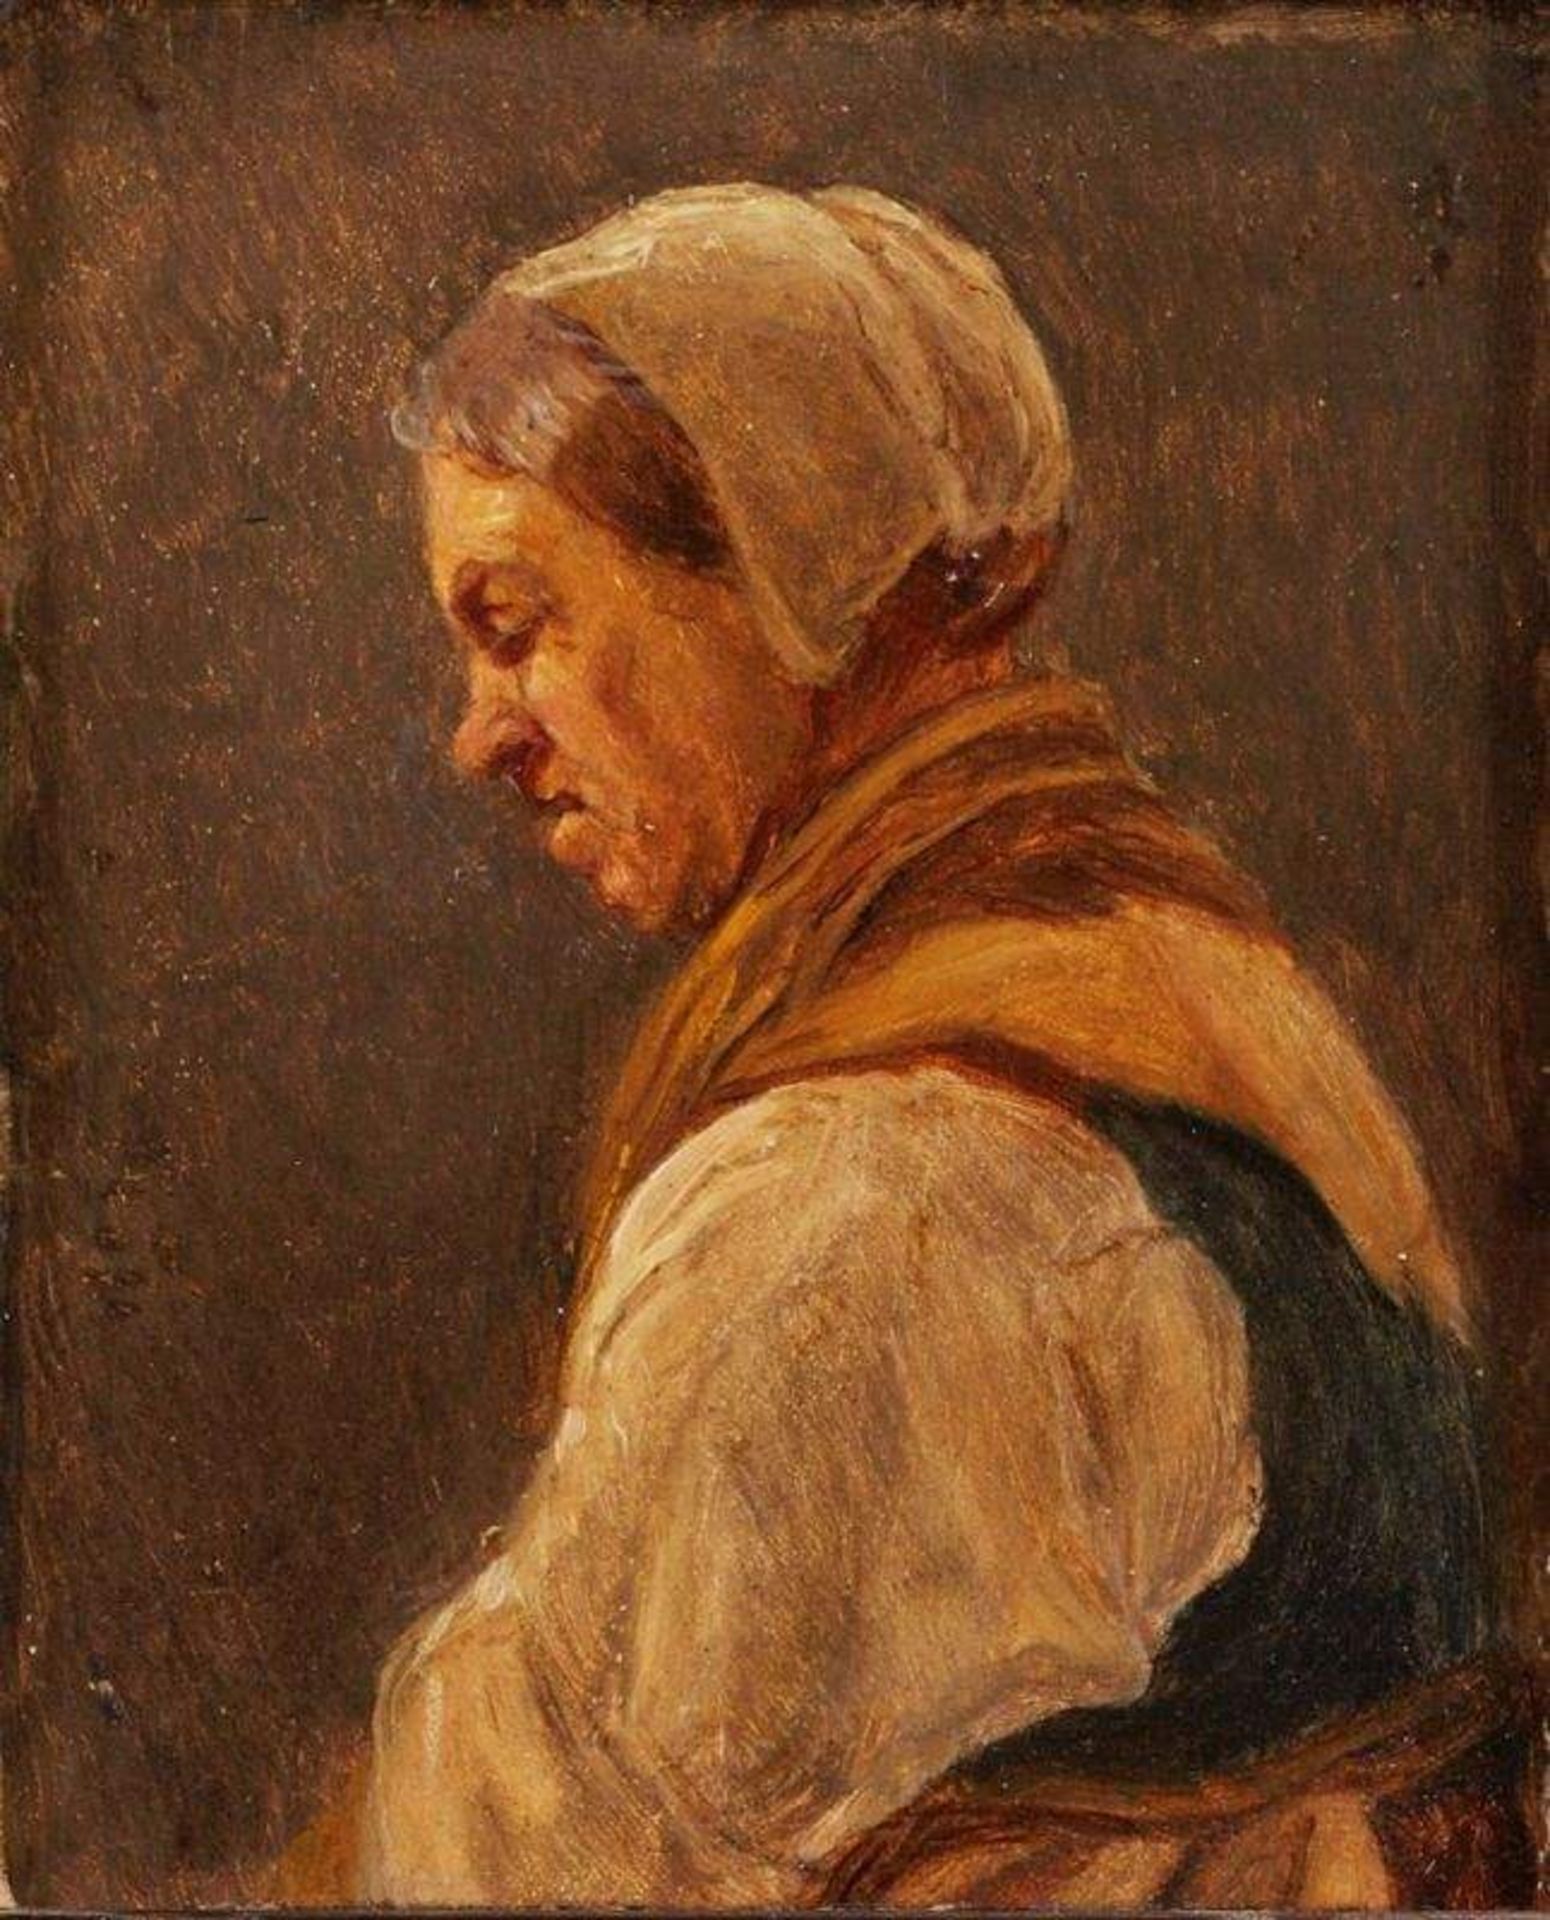 Gemälde Anton Burger1824 Frankfurt - 1905 Kronberg "Studie einer Marktfrau" Öl/Holz, 9,5 x 9 cm